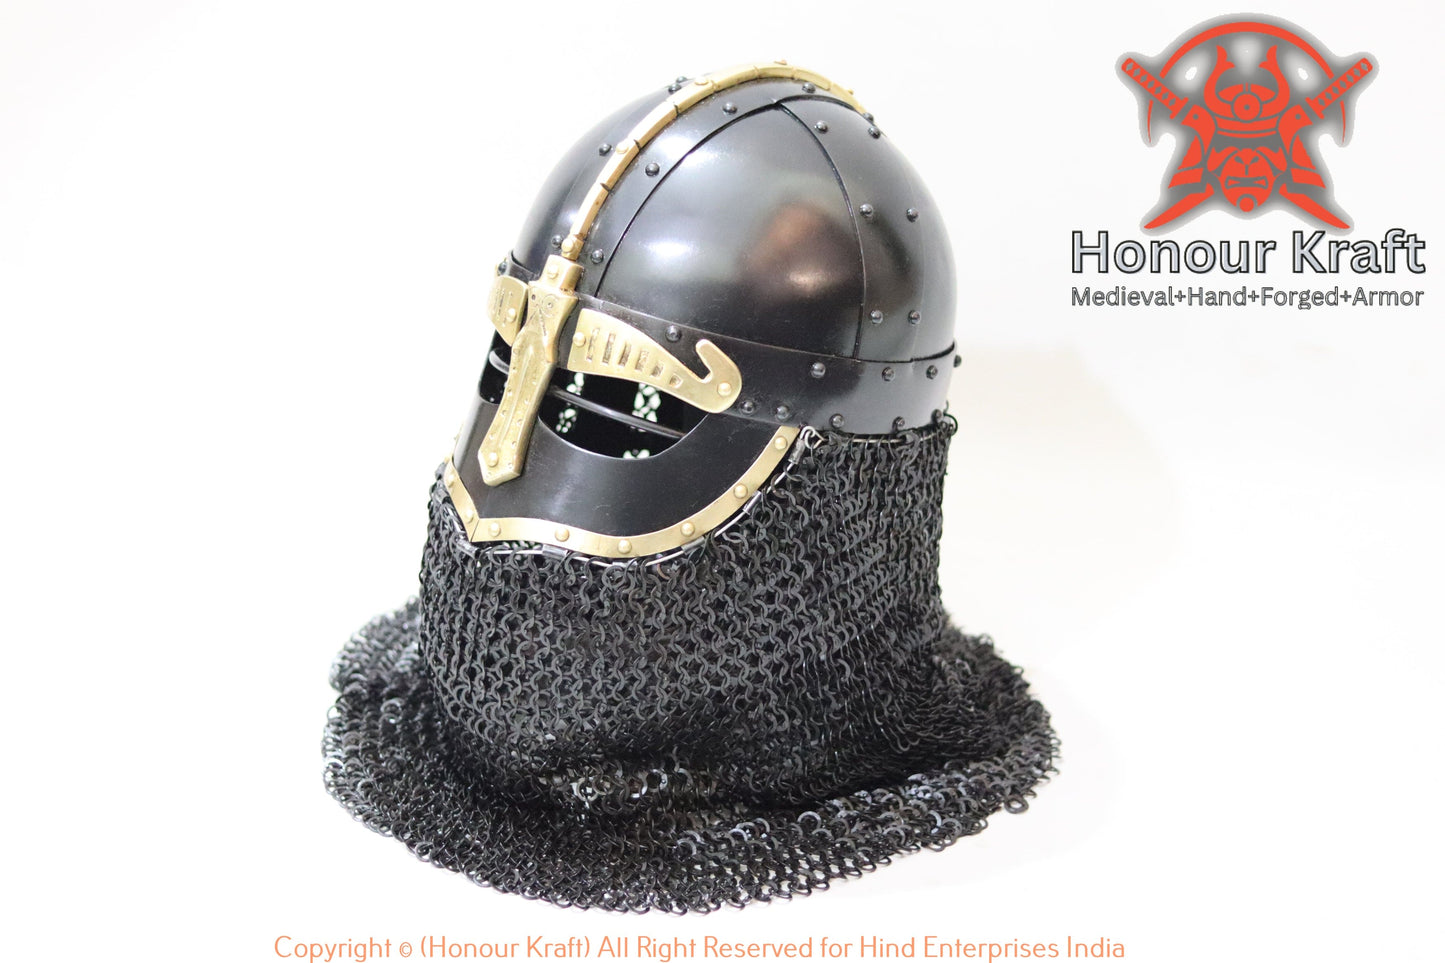 sca armor viking helmet tur armor for sca medieval combat knight armor